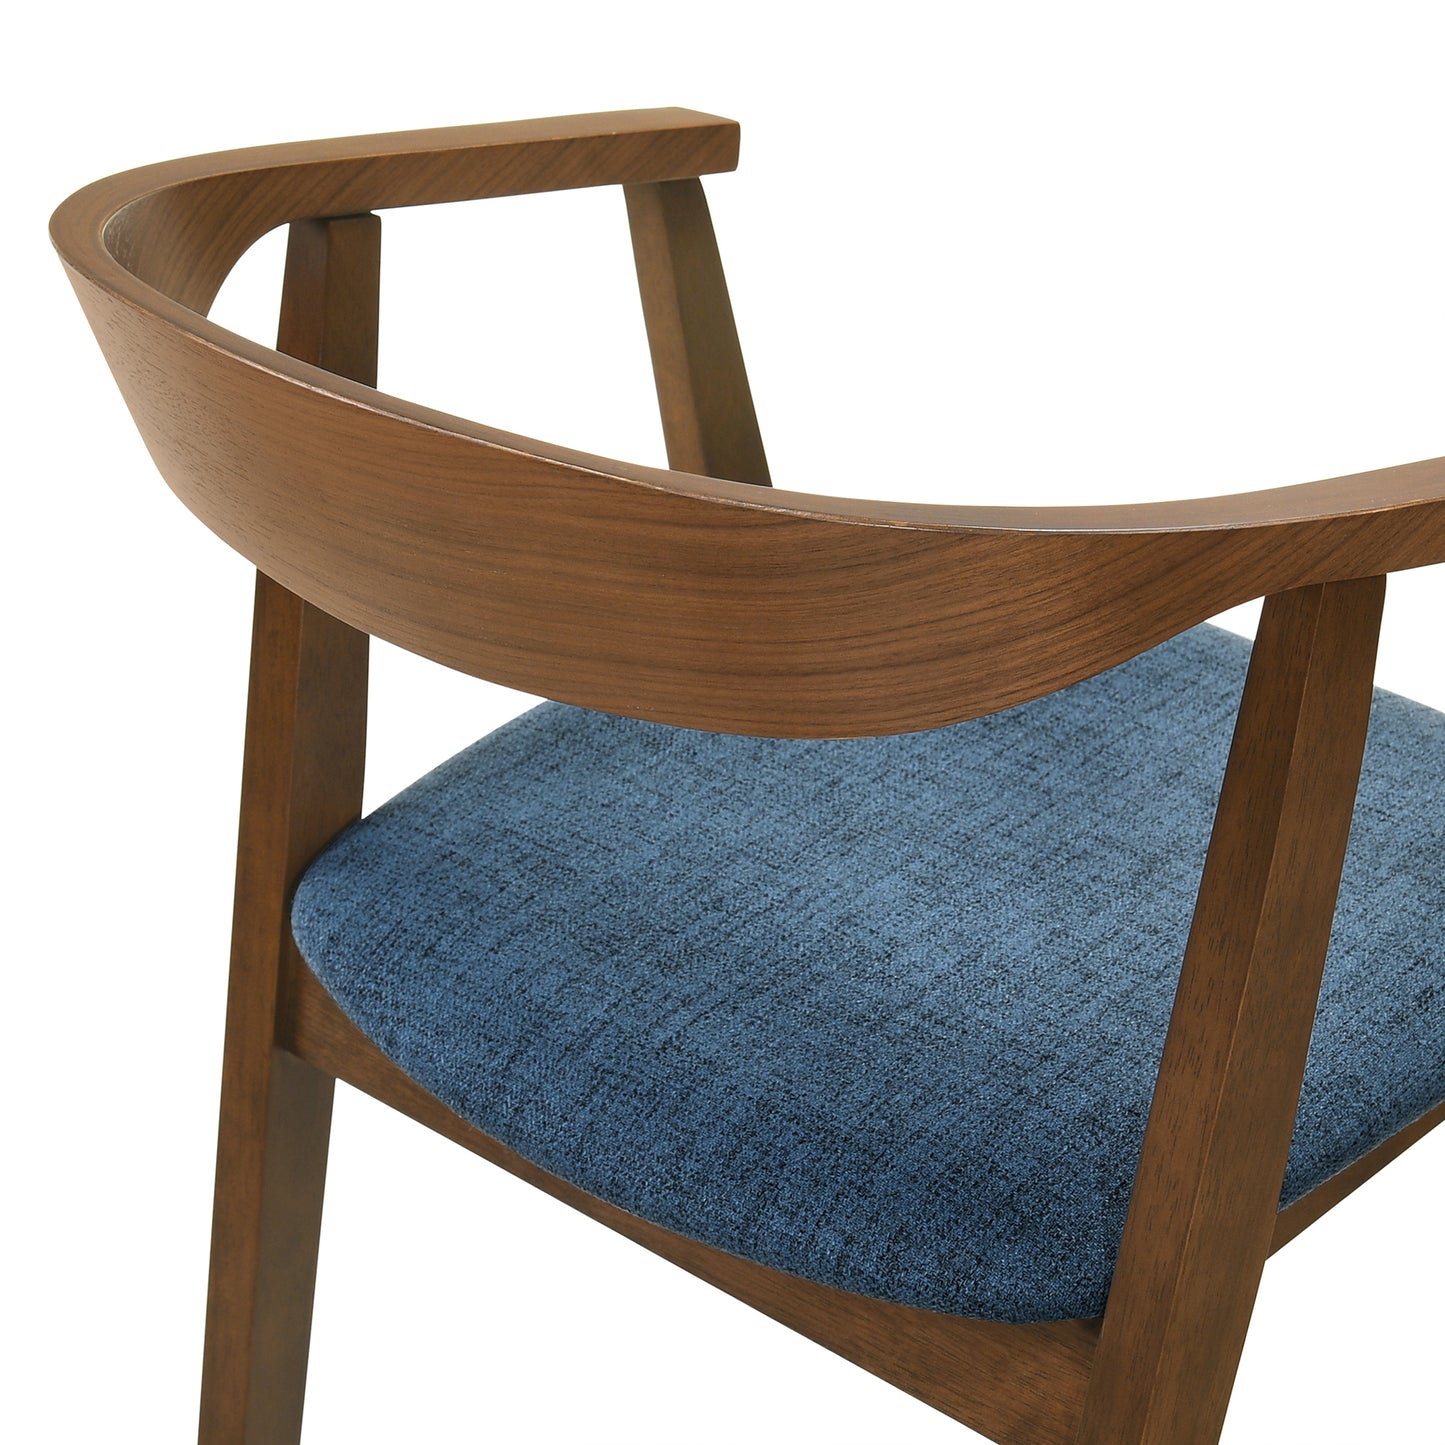 Santana 5 Piece Round Walnut Wood Dining Table Set with Blue Fabric